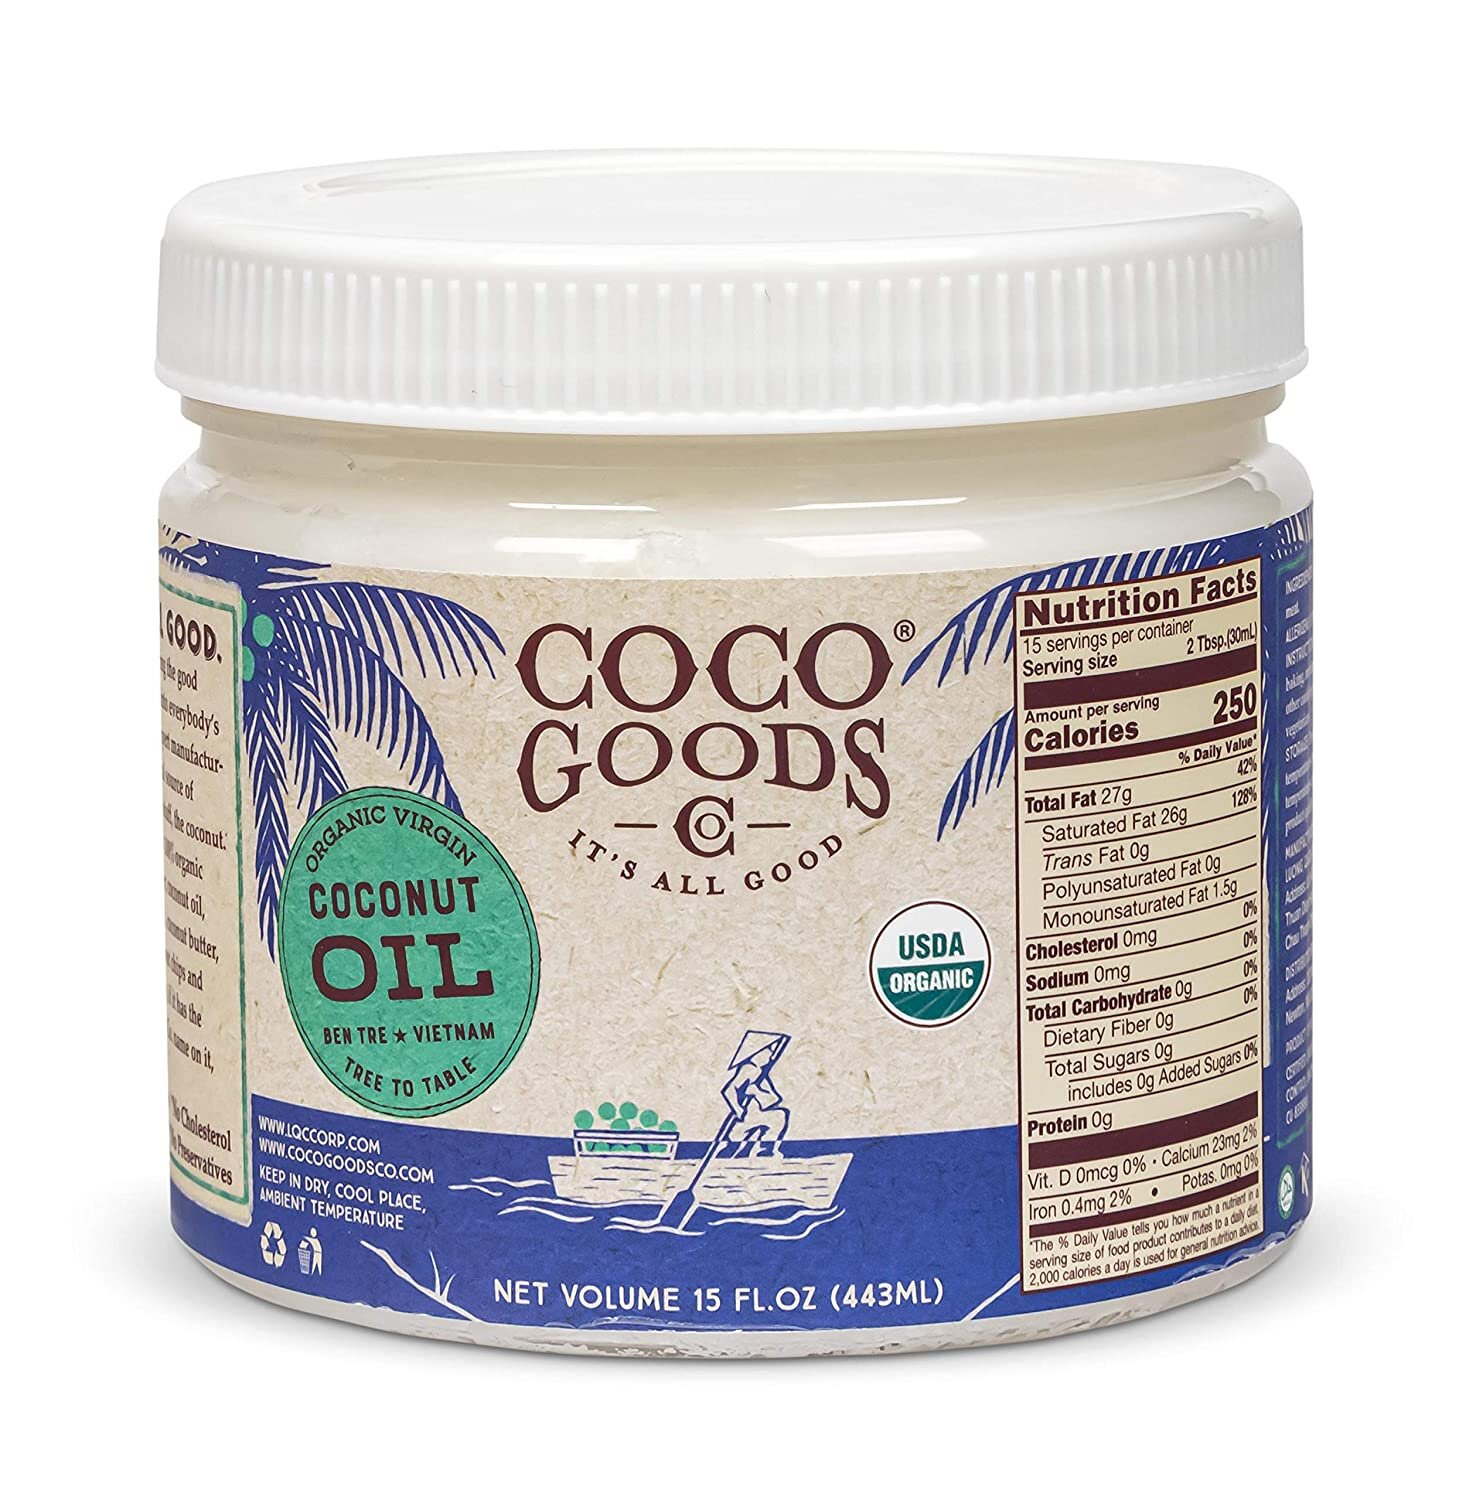 Coco Goods coconut oil